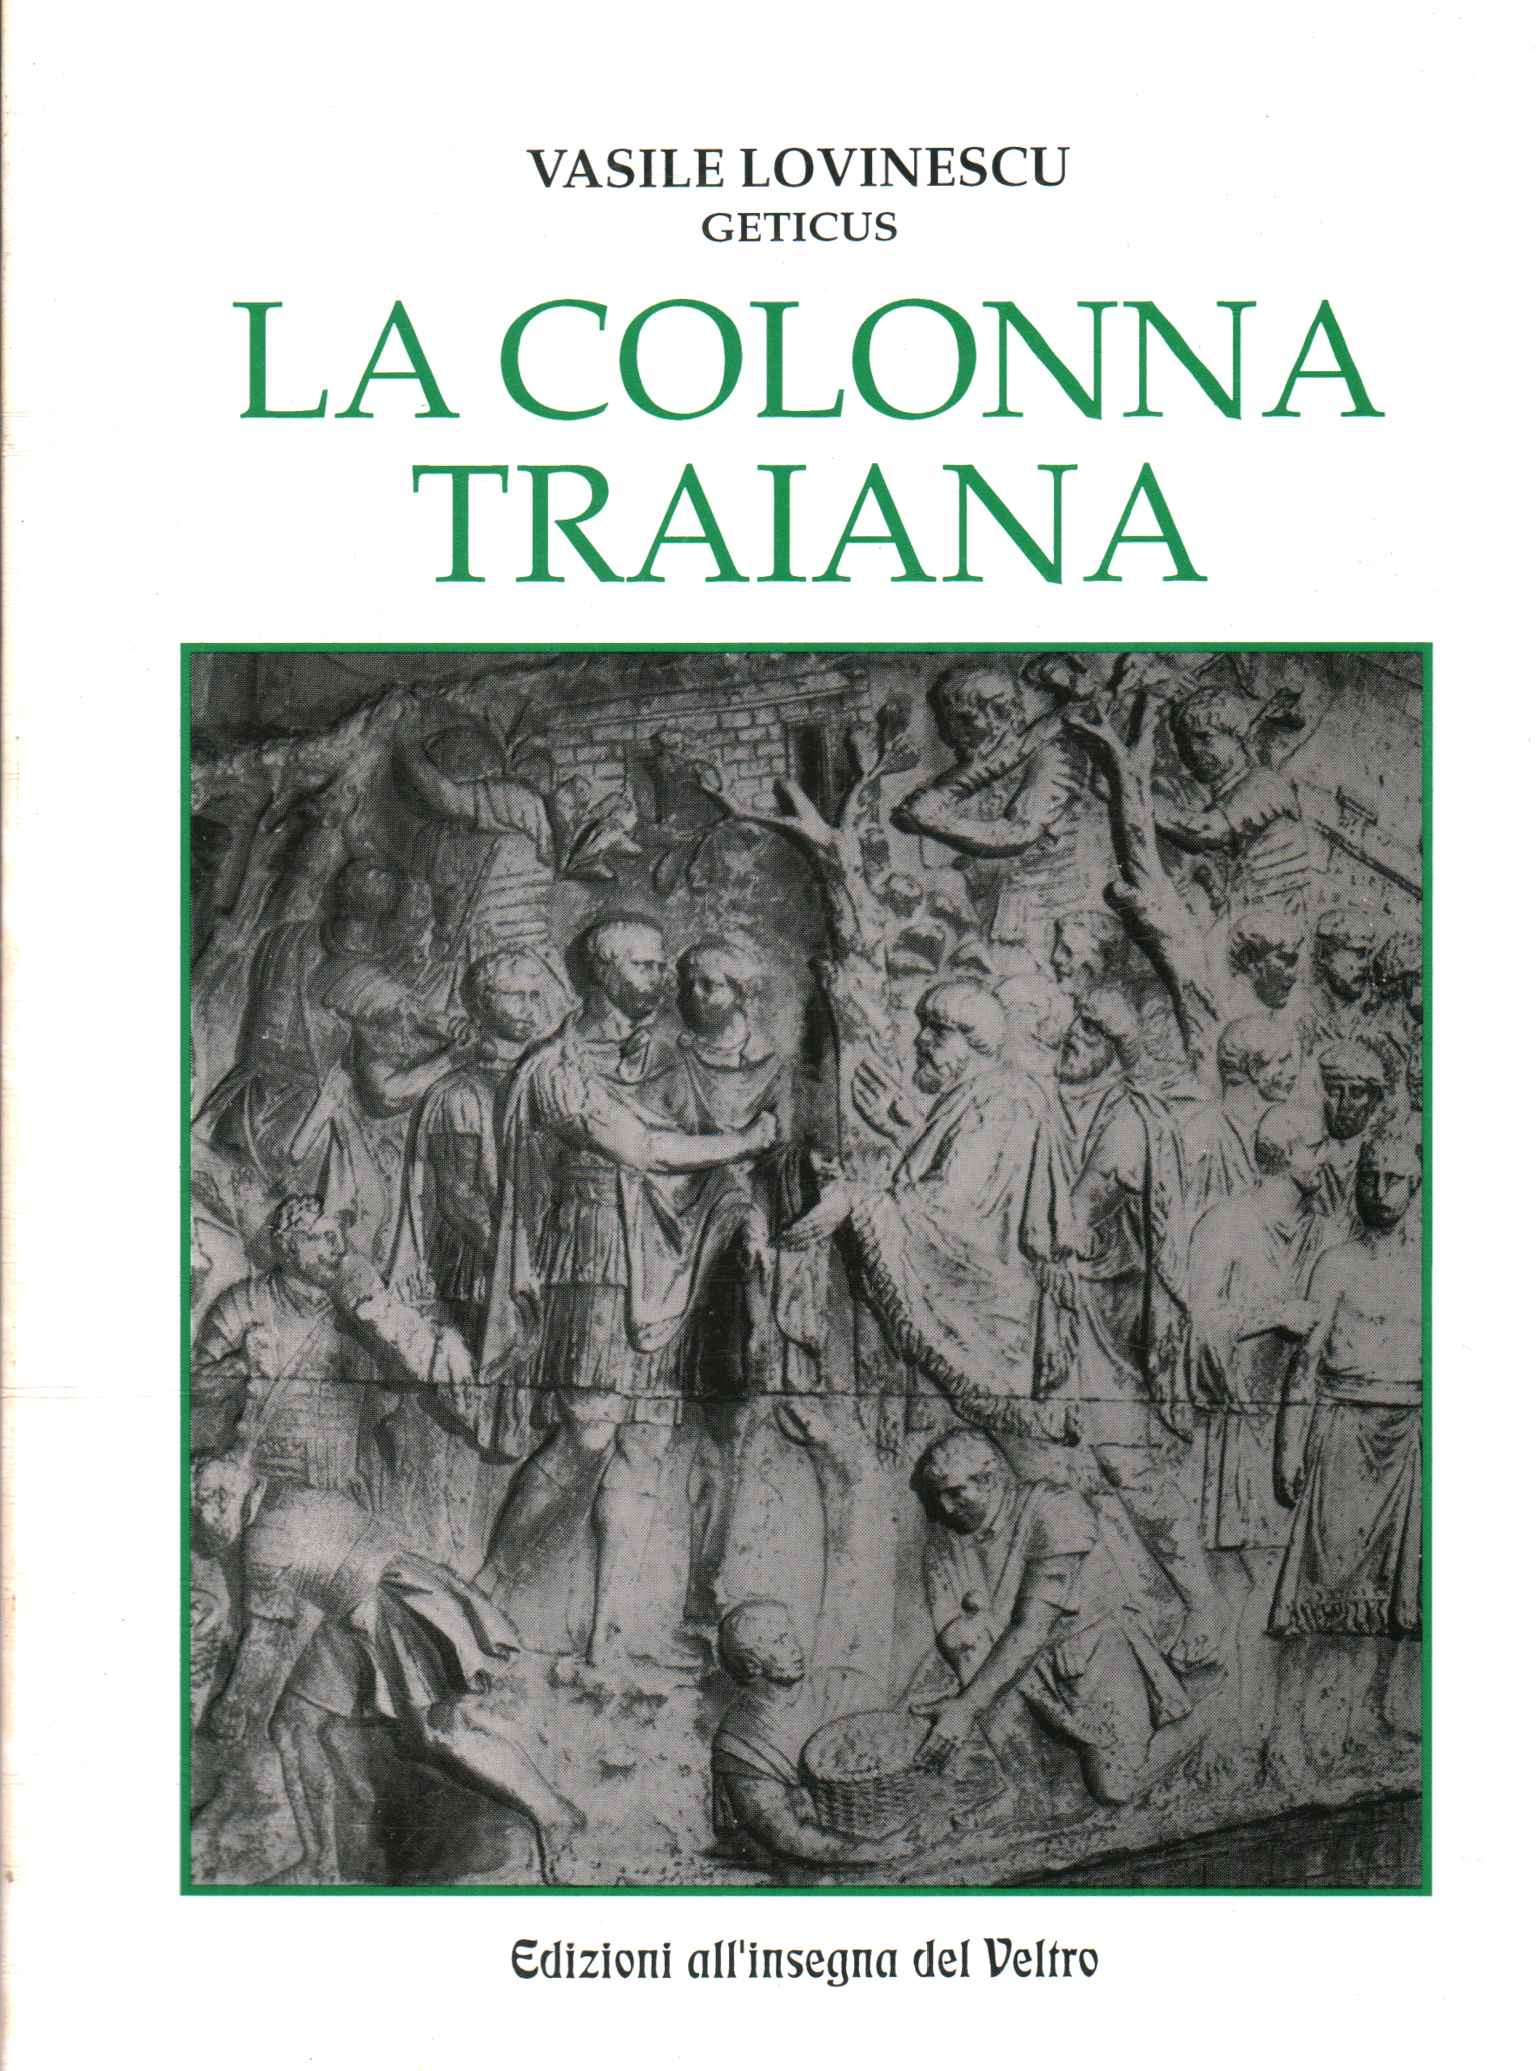 Trajan's column